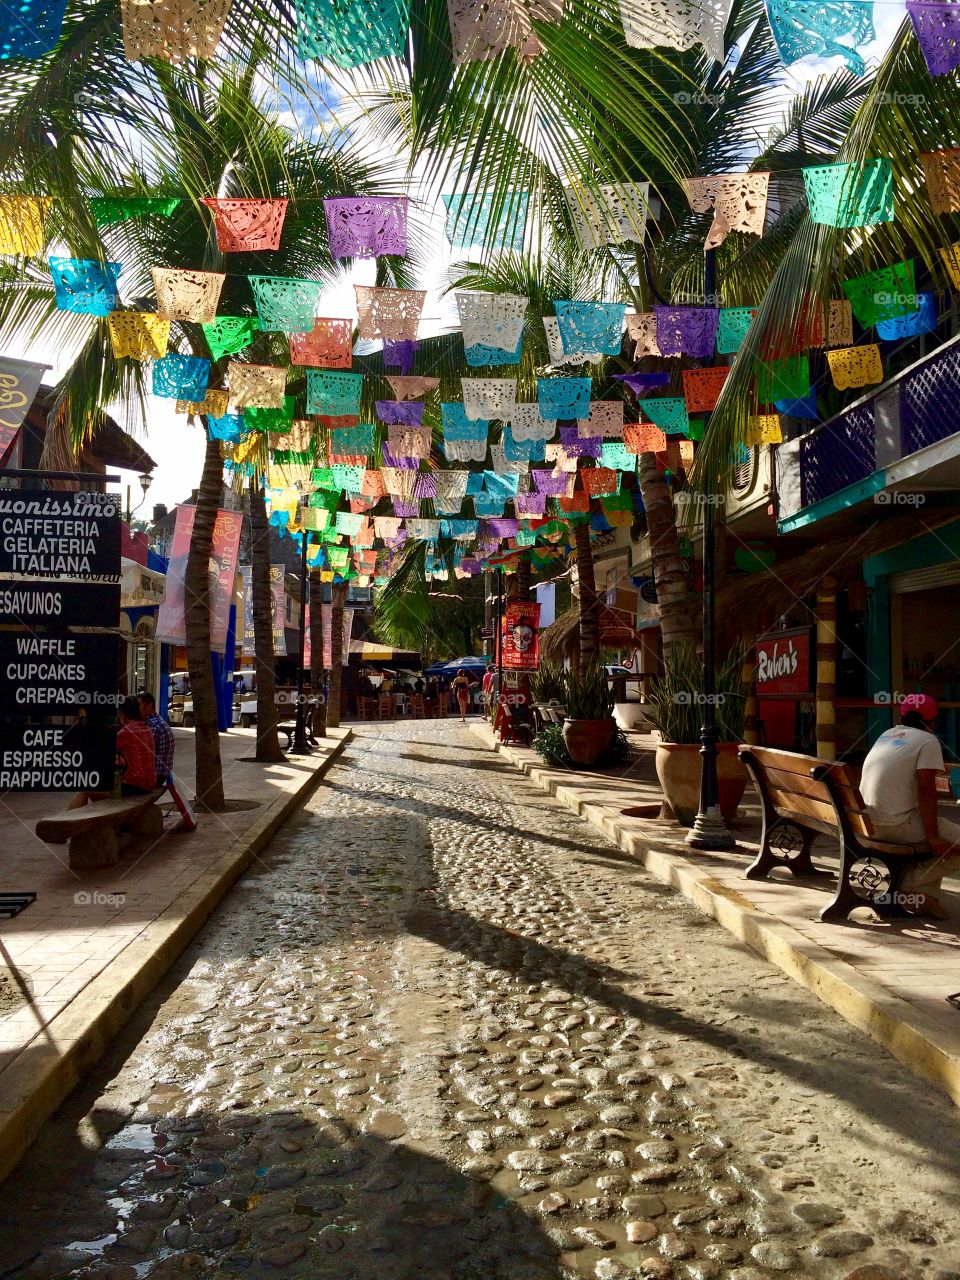 Streets of Mexico
Sayulita, Mexico 